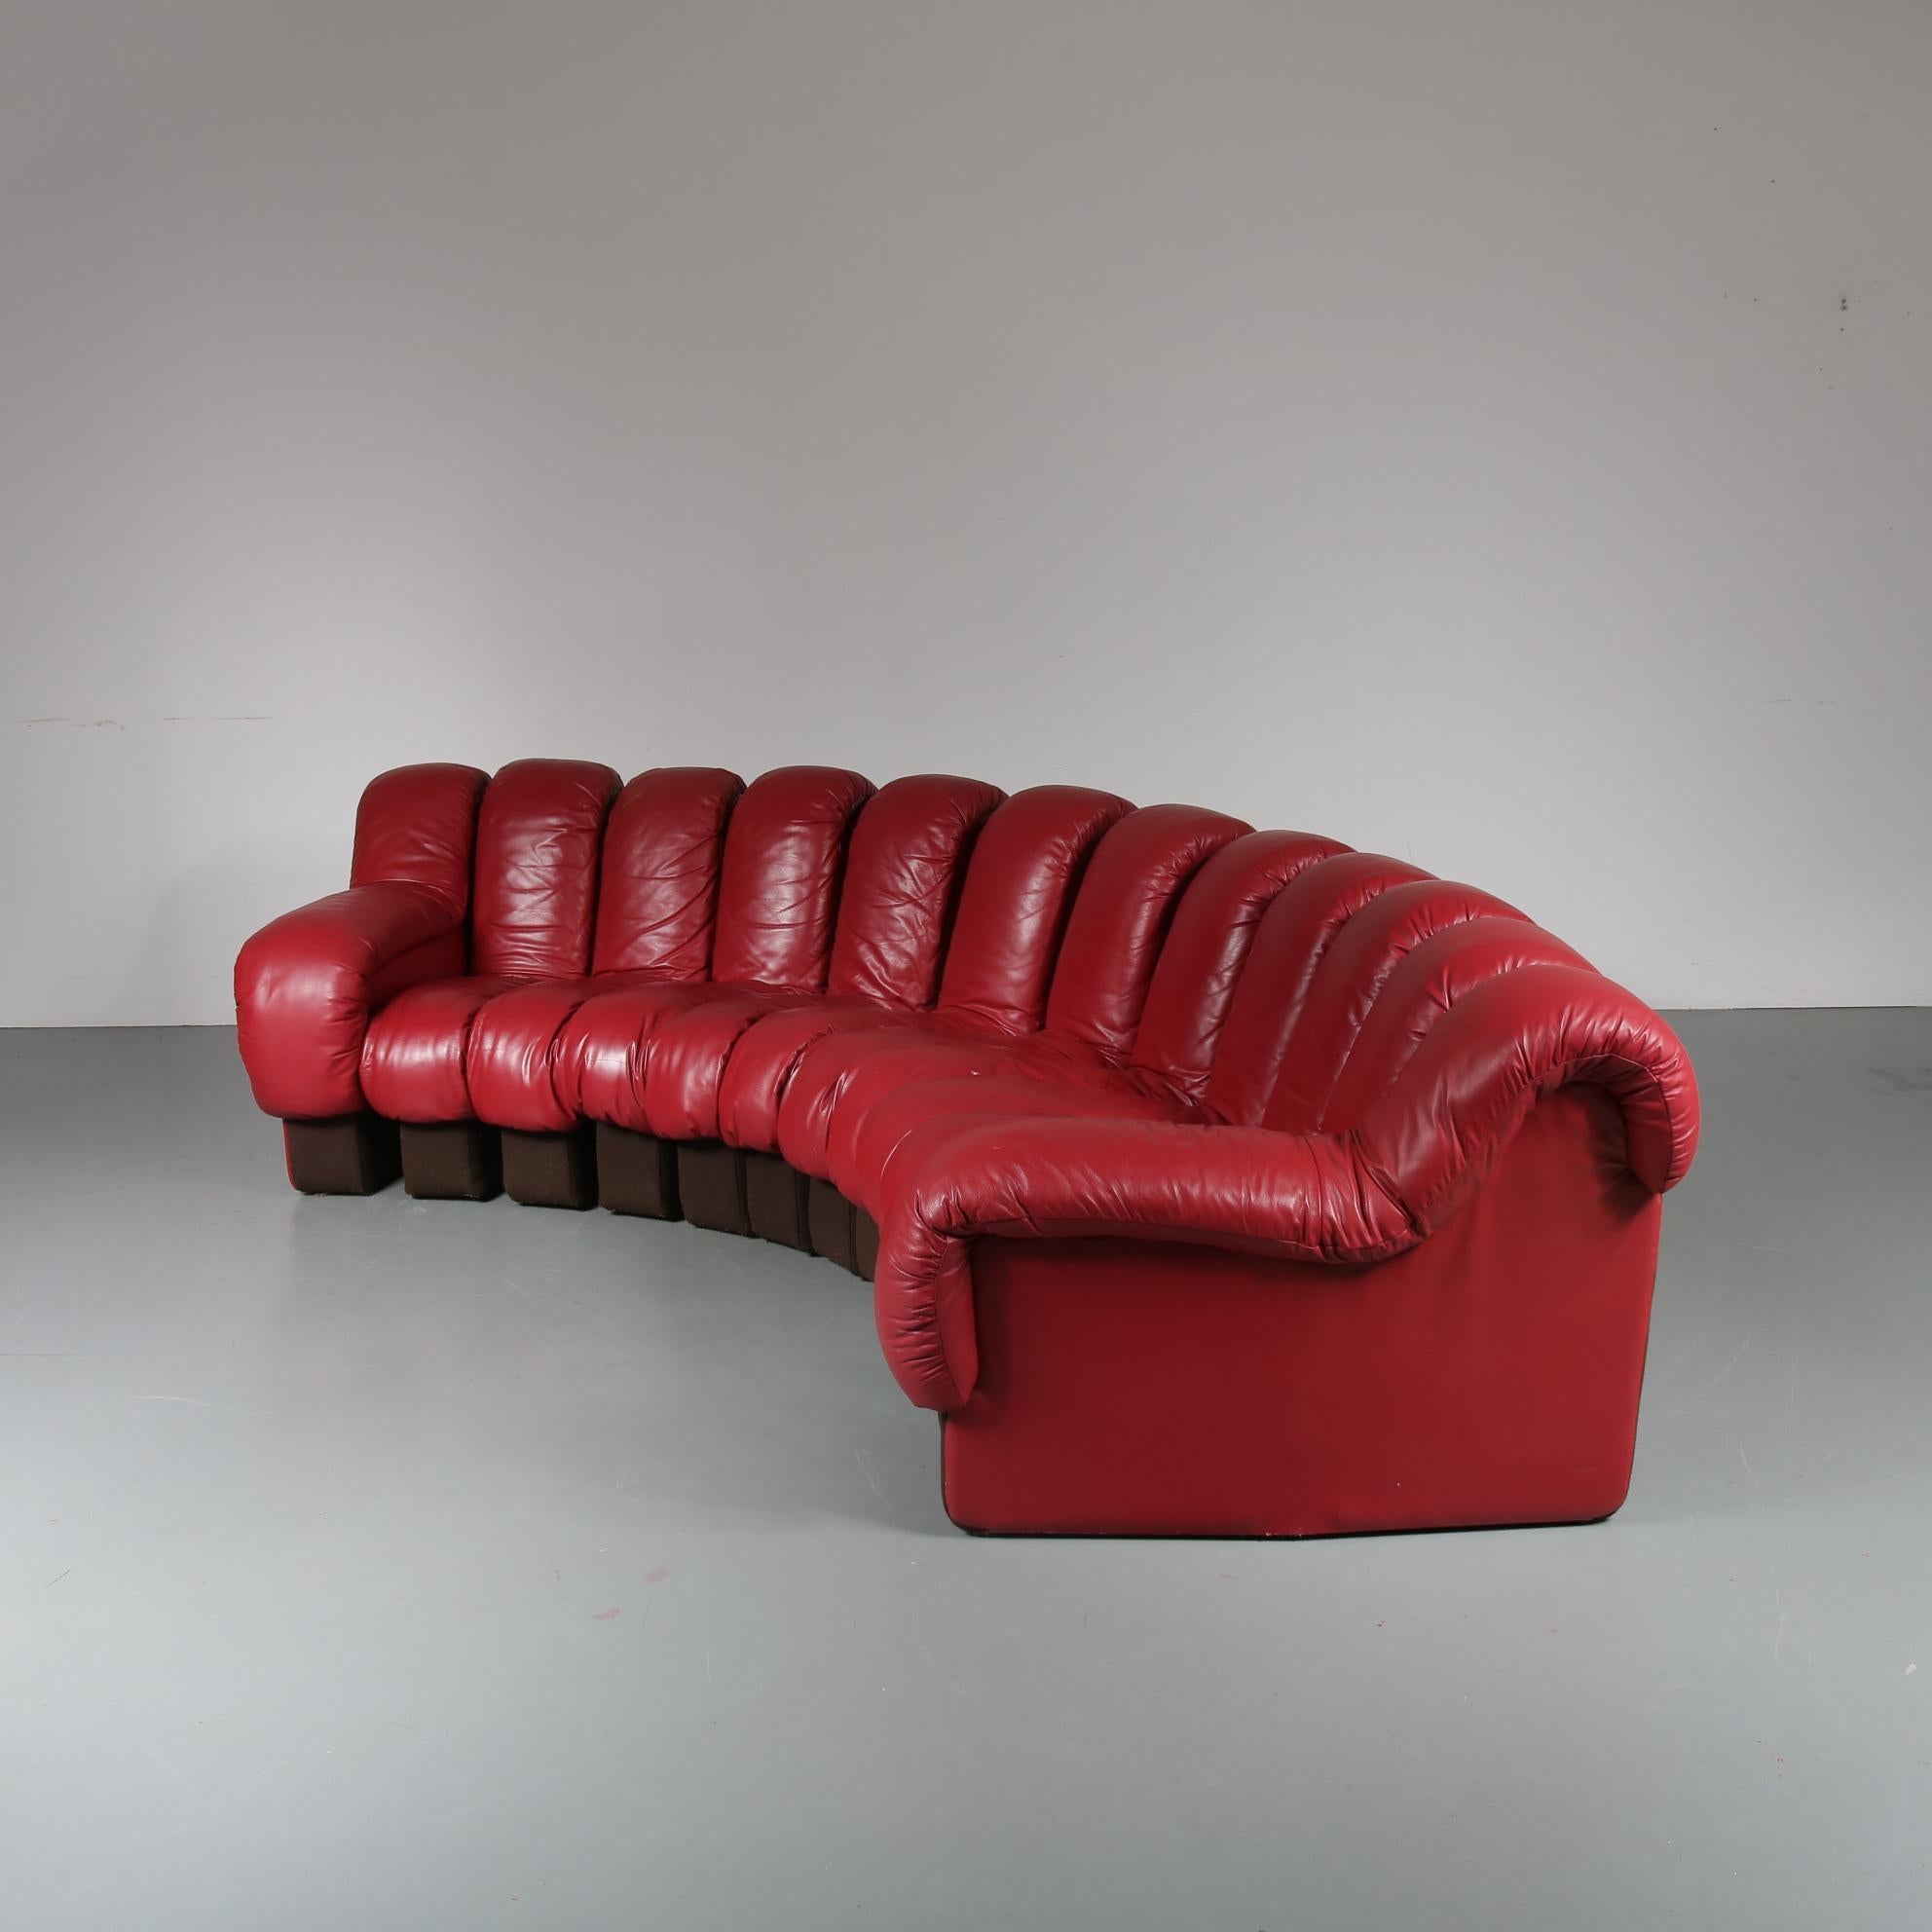 Swiss De Sede DS-600 Sofa in Red Leather, Switzerland, 1960